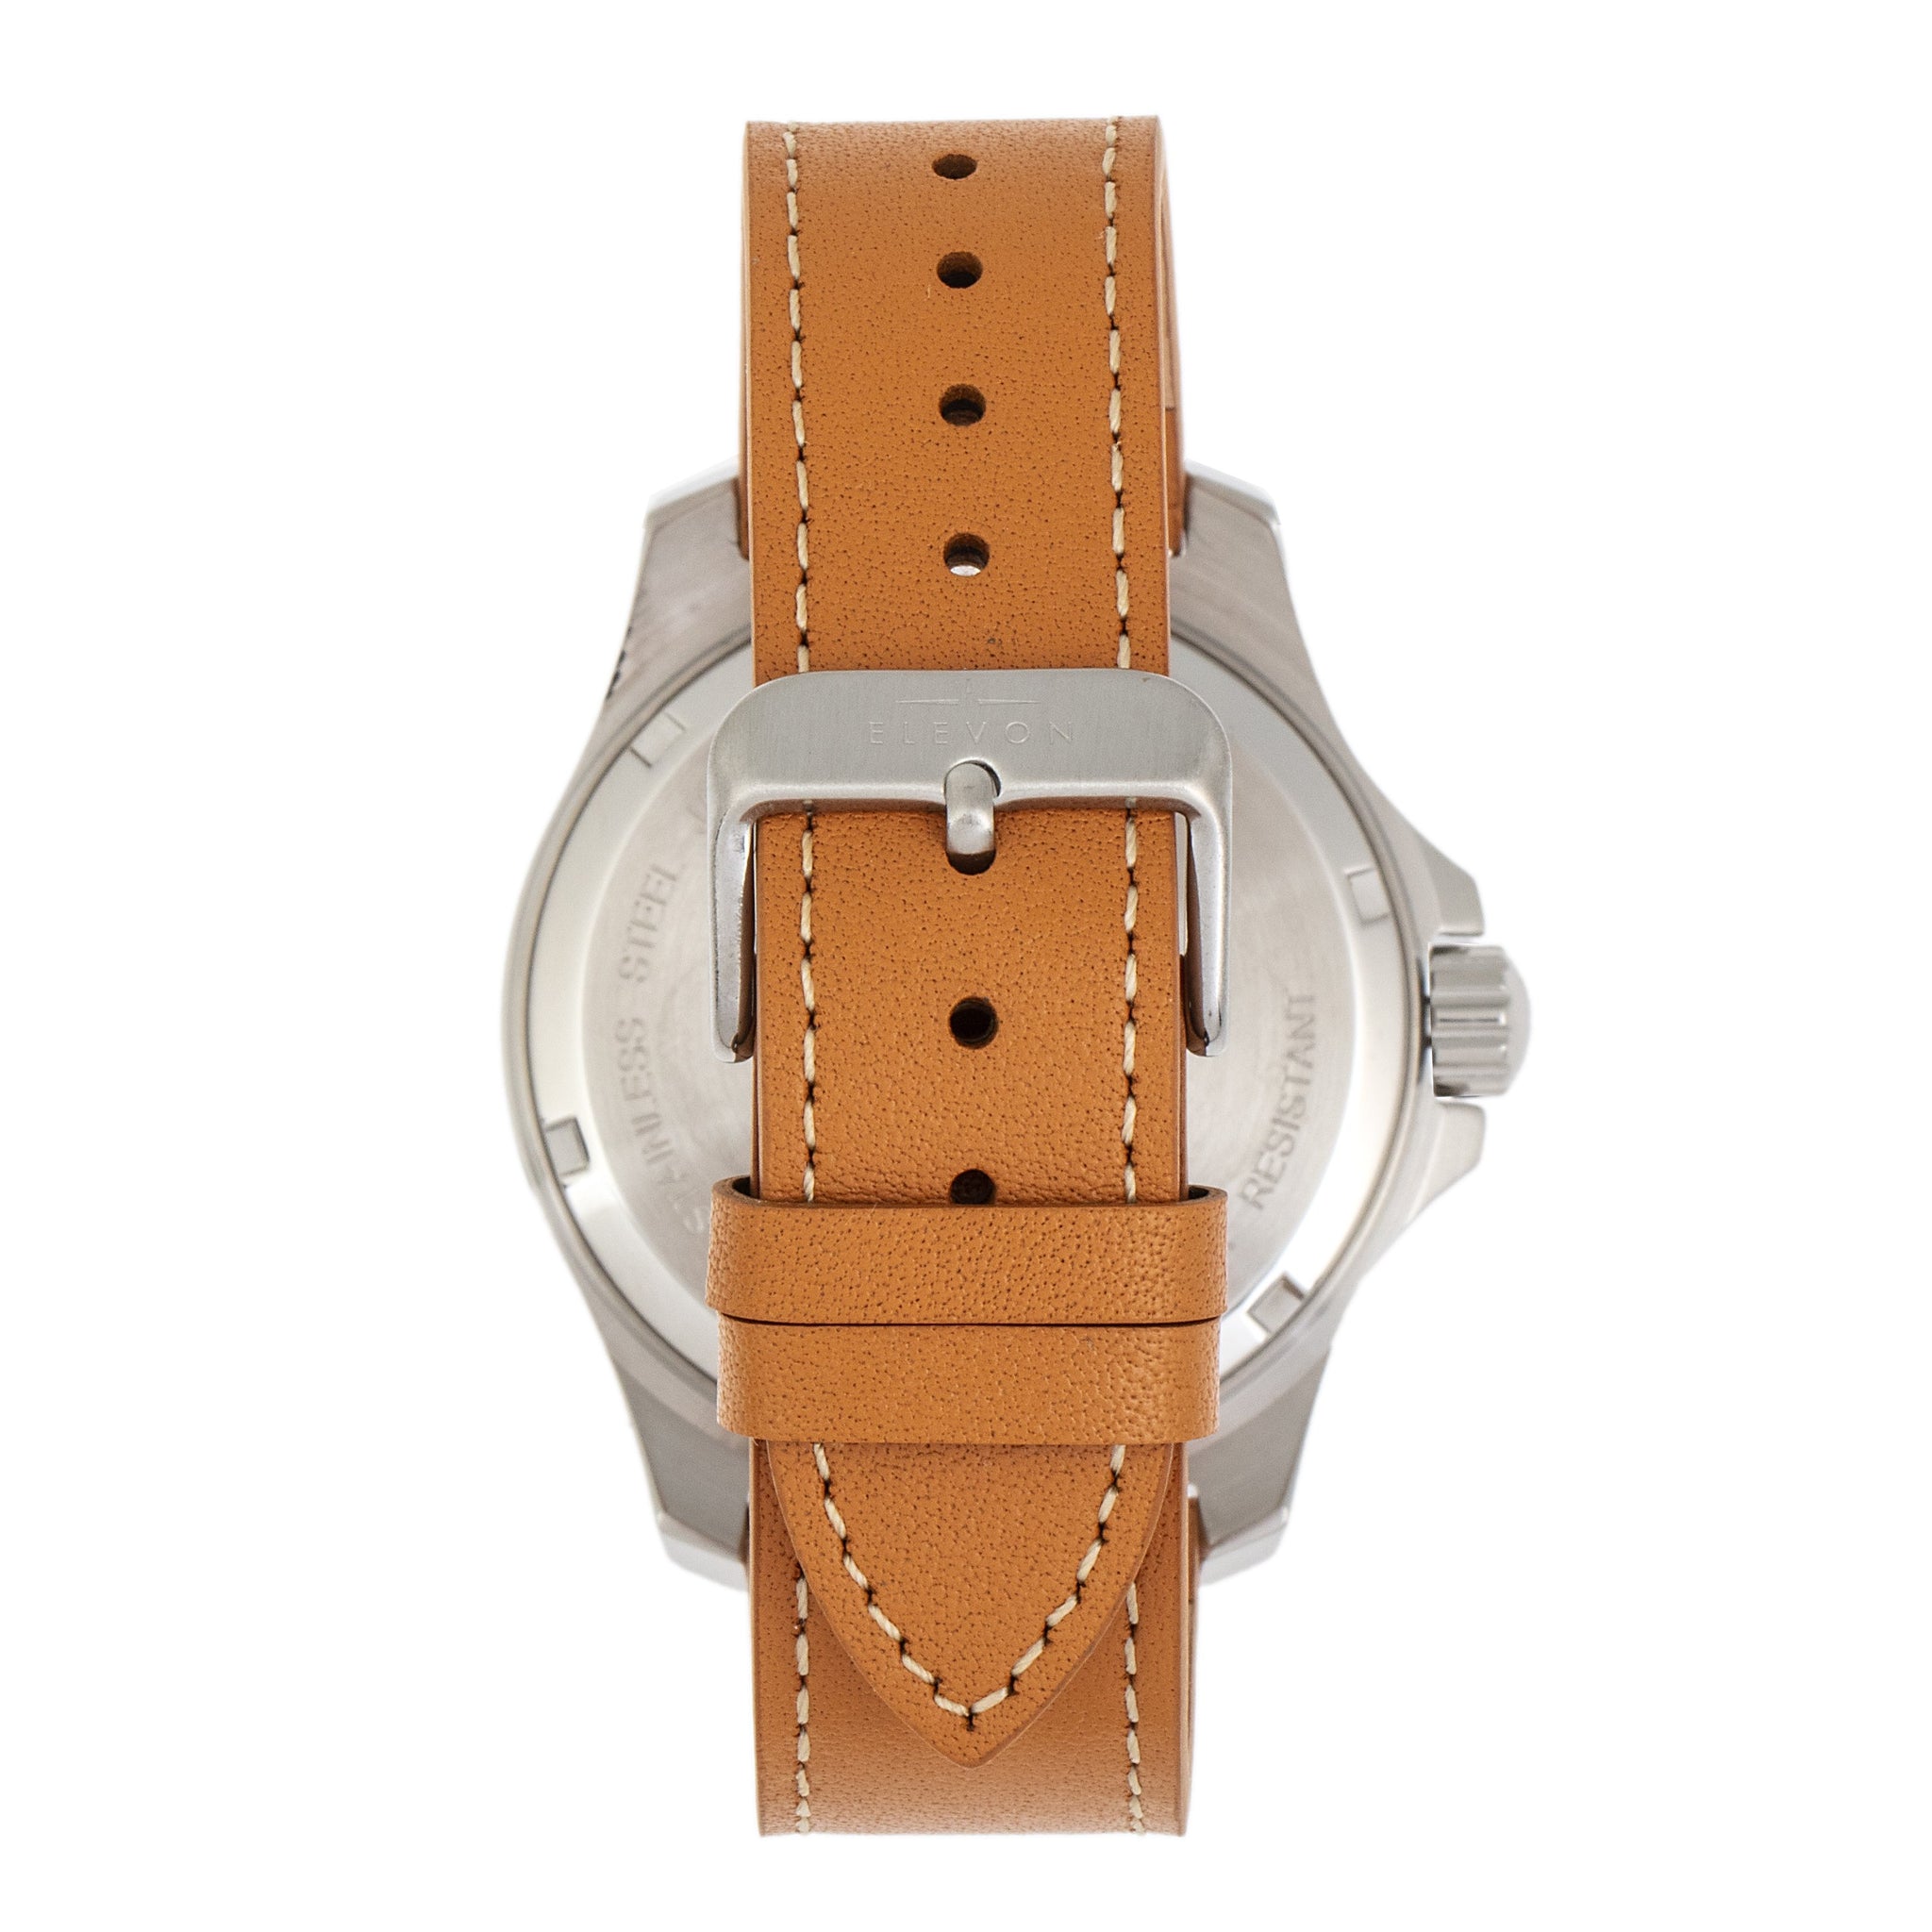 Elevon Aviator Leather-Band Watch w/Date - Camel/Brown - ELE120-14